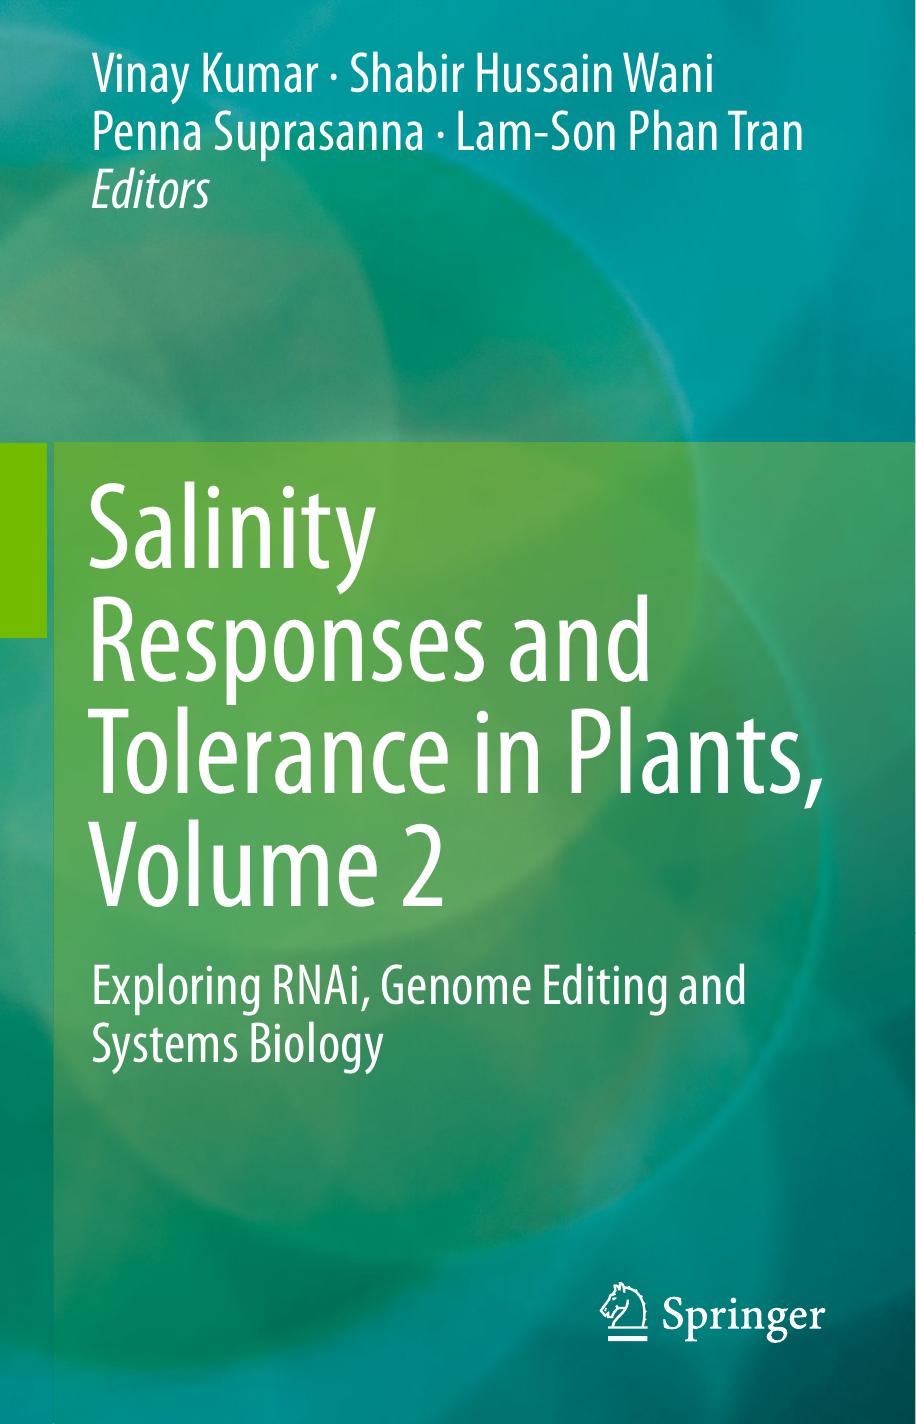 Salinity Responses and Tolerance in Plants, Volume 2 Exploring RNAi, 2018